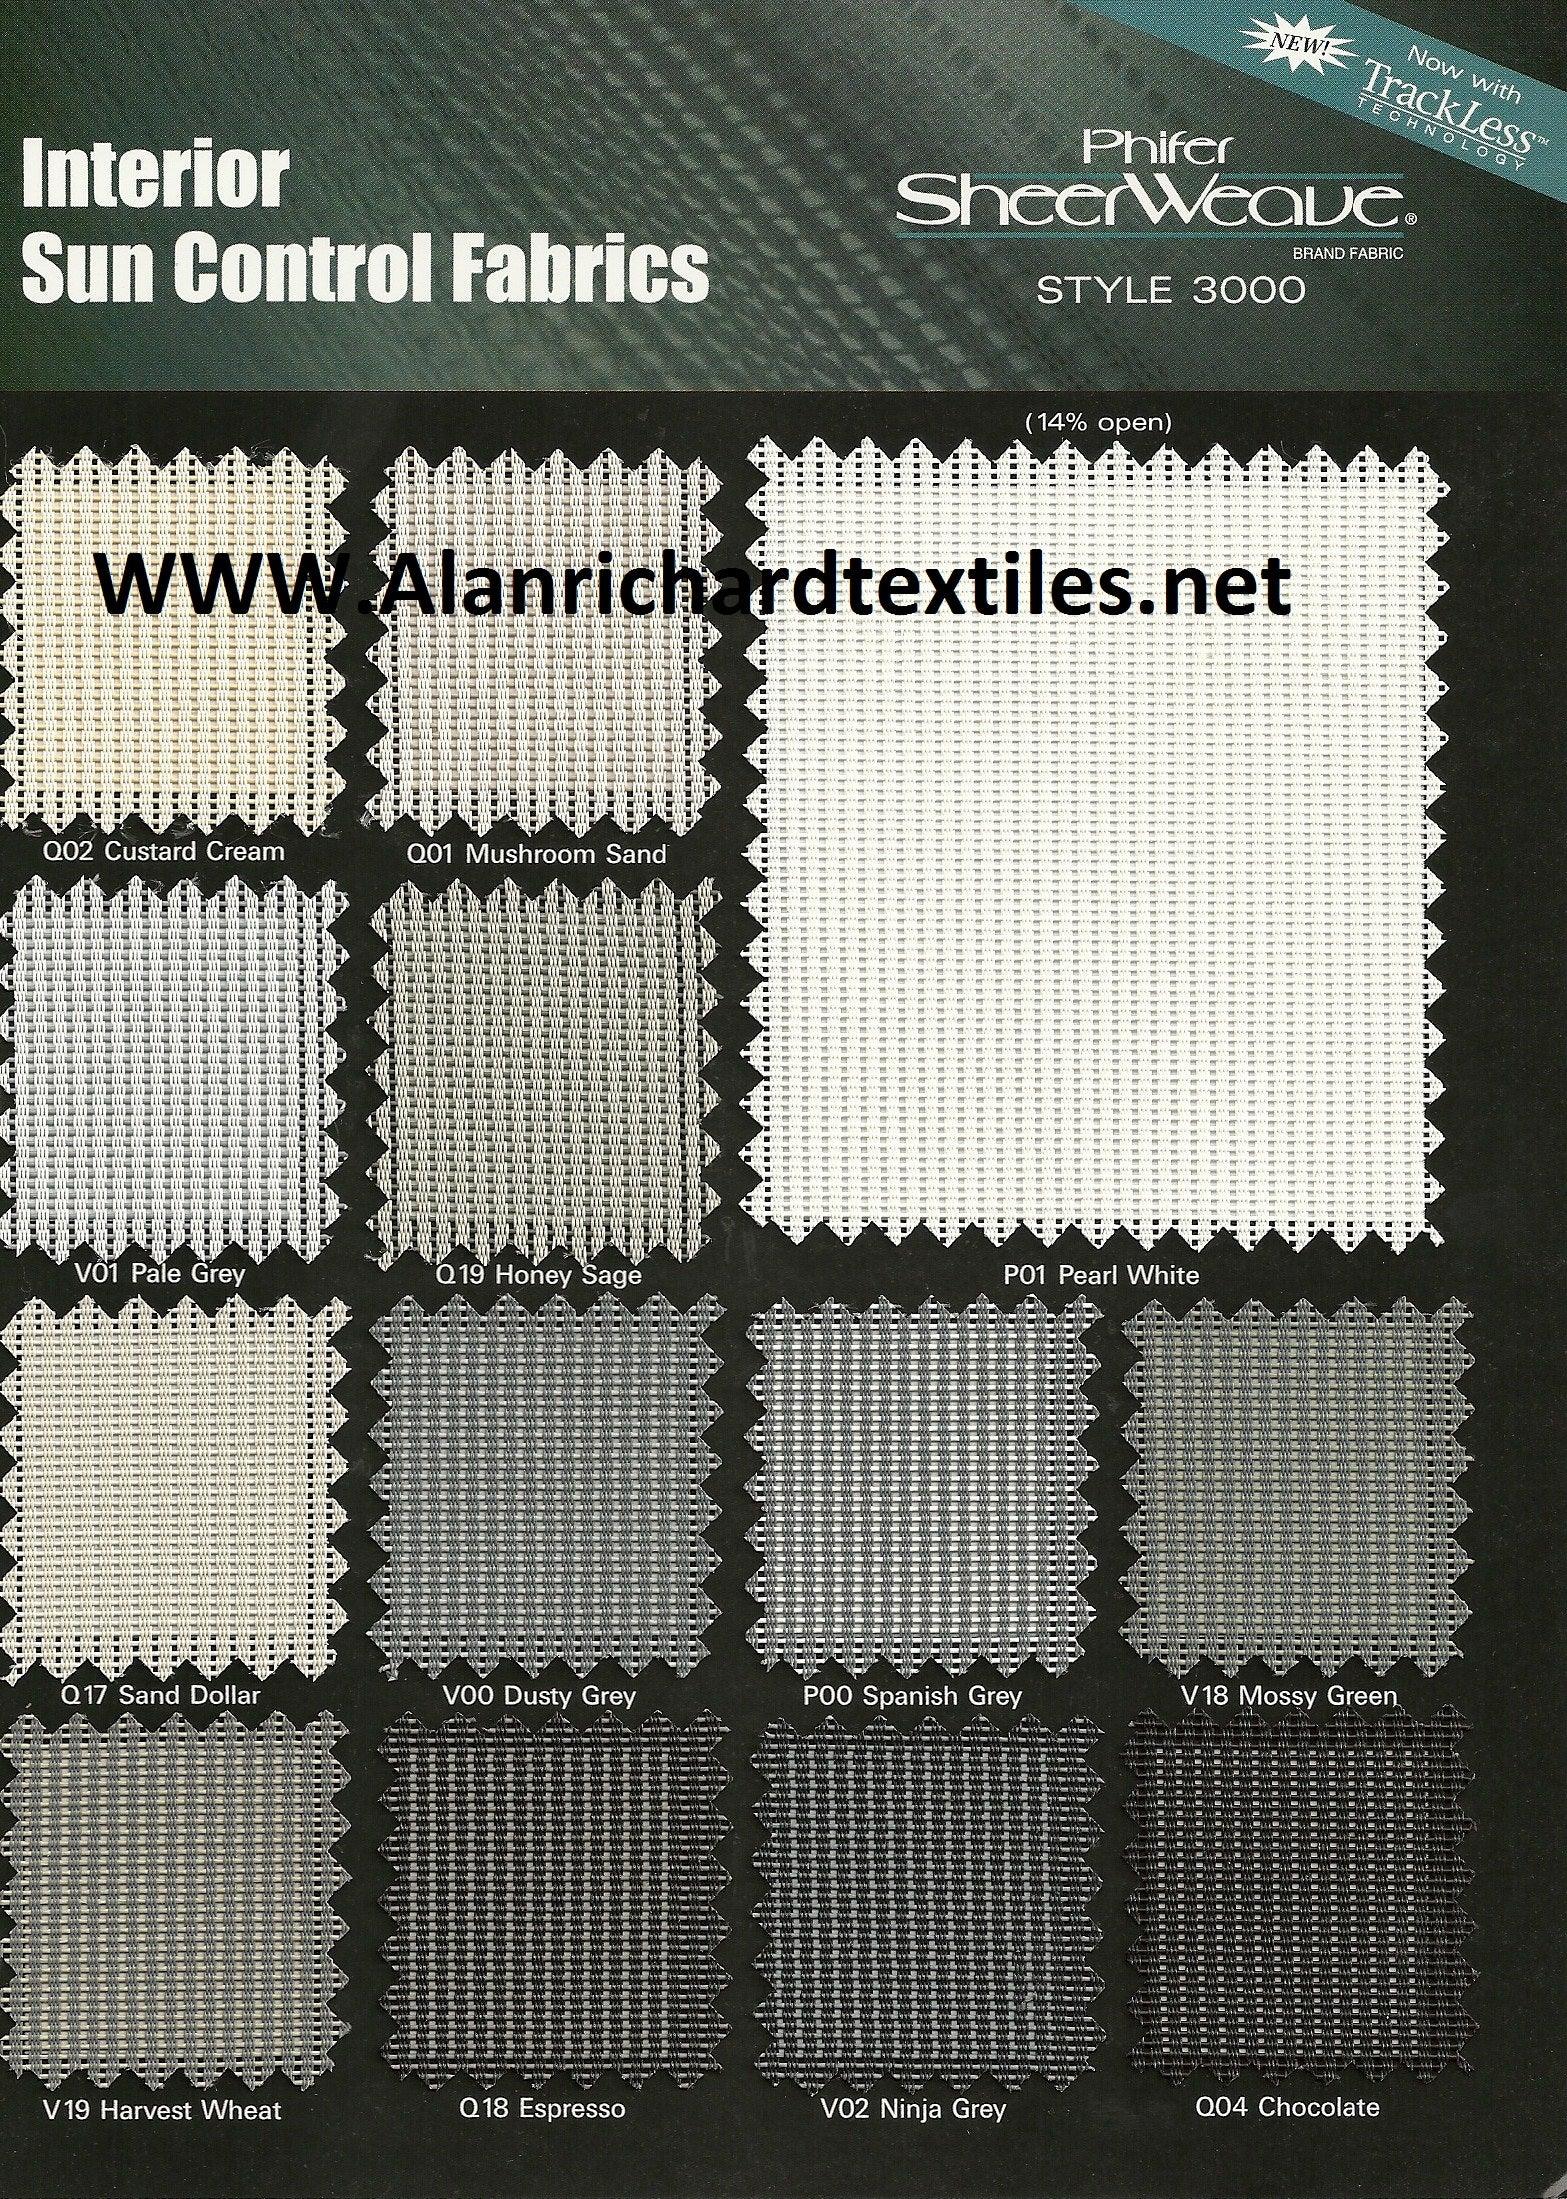 3000 Phifer SheerWeave® Series (14% openness) - Alan Richard Textiles, LTD